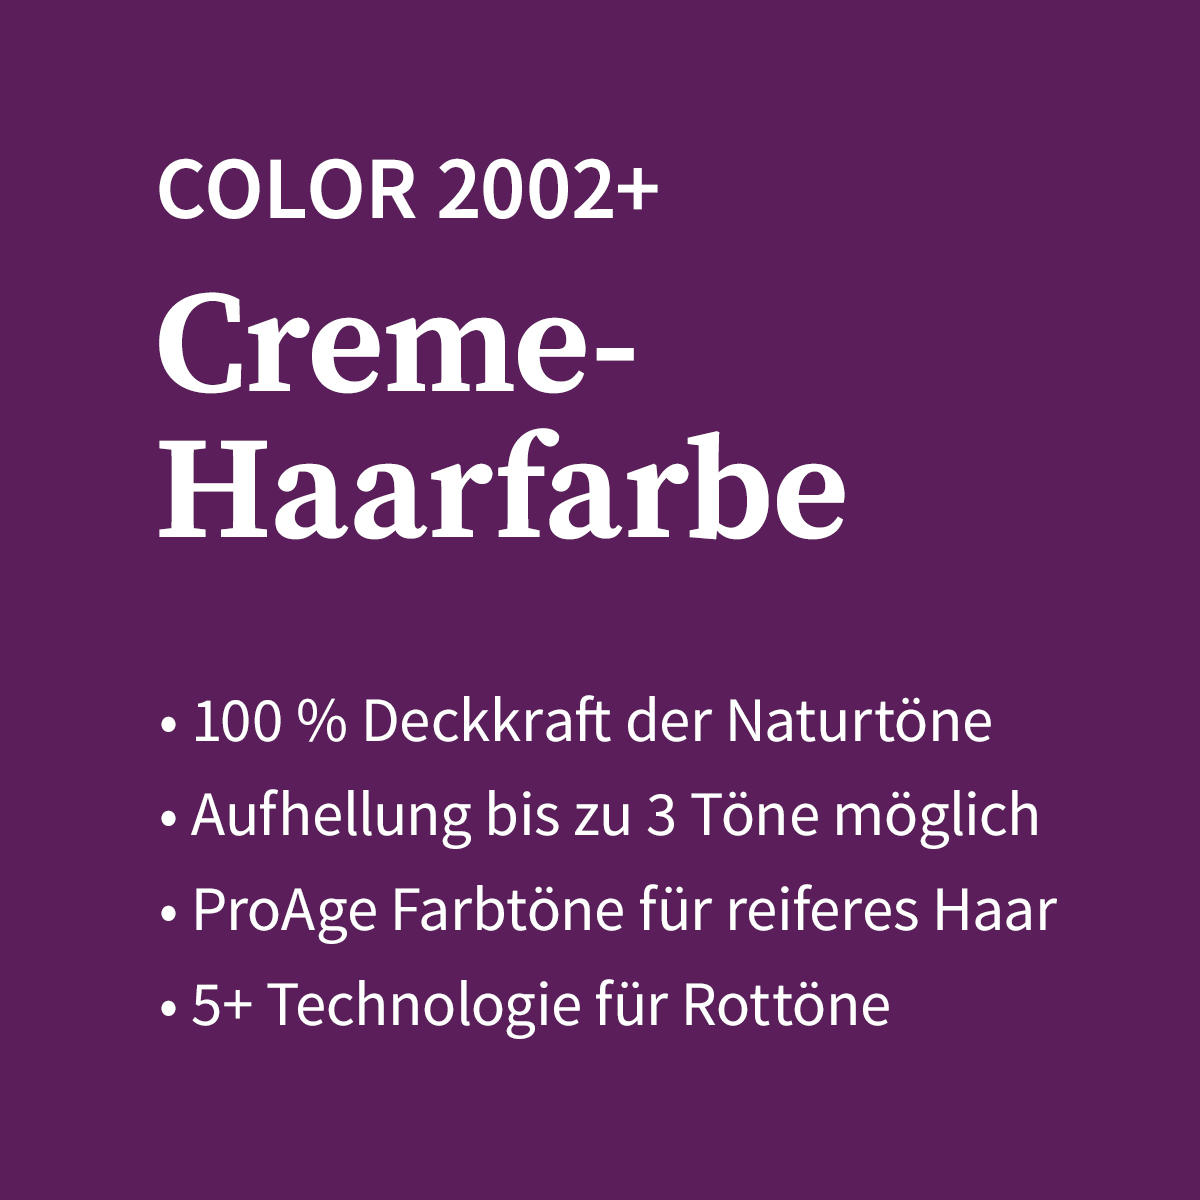 Basler Color 2002+ Cremehaarfarbe 11/1 hell lichtblond asch, Tube 60 ml - 4